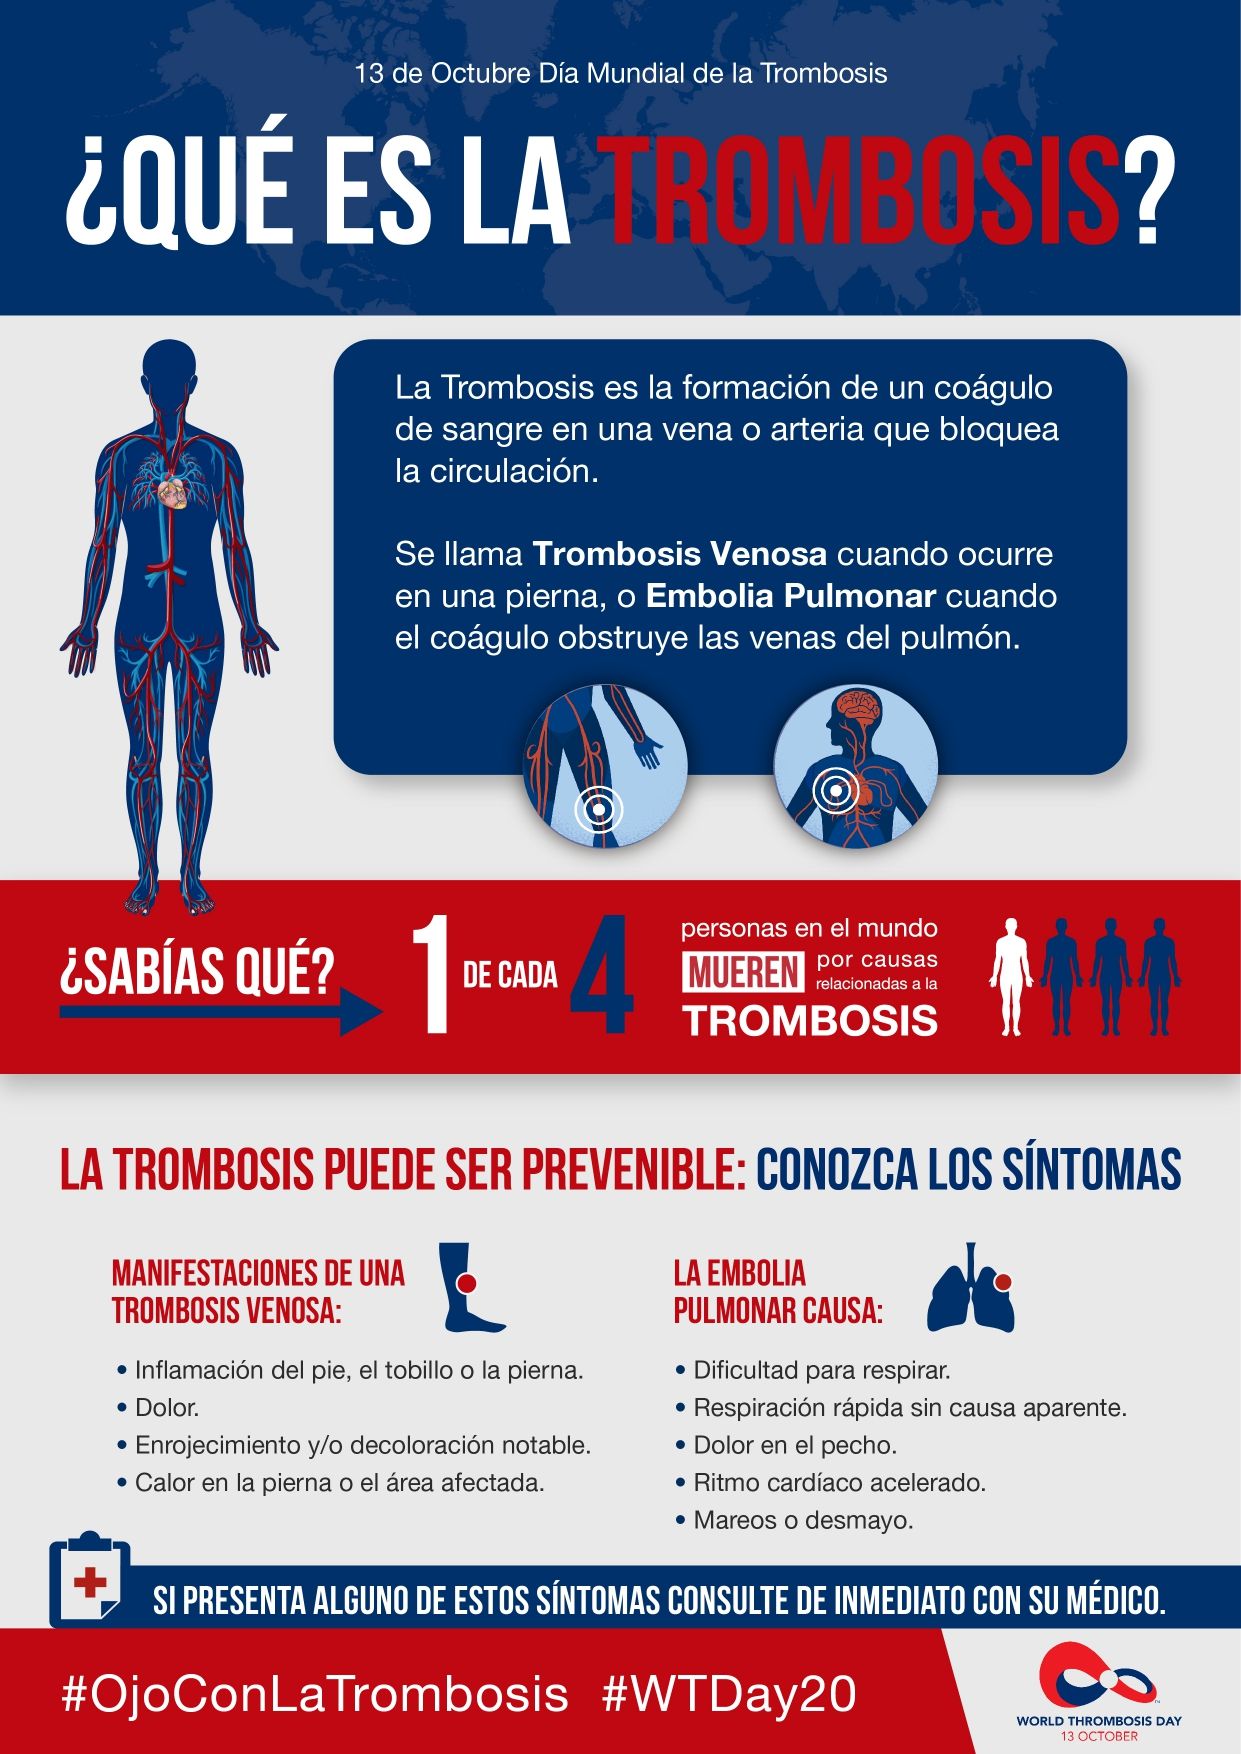 Dia Mundial De La Trombosis La Prevencion Y La Deteccion Temprana Salvan Vidas